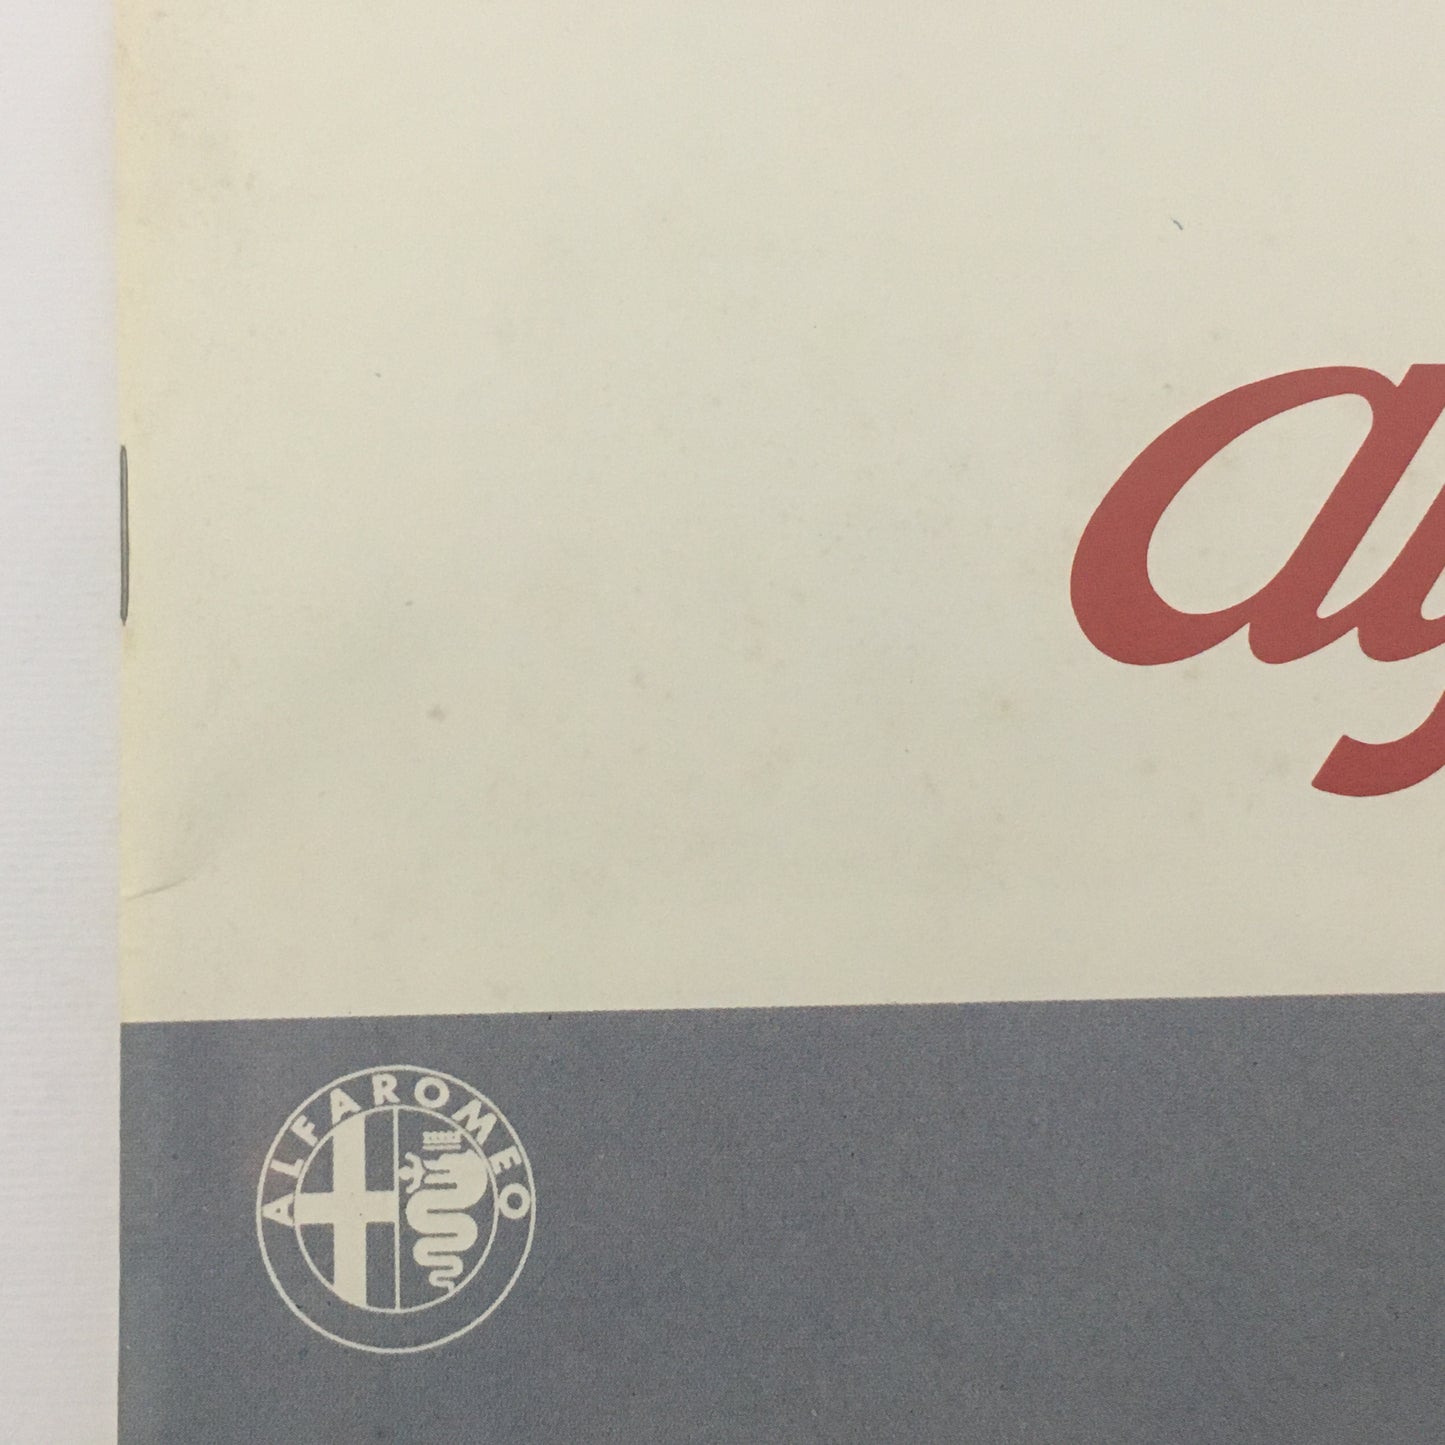 Alfa Romeo, Brochure Alfasud Sprint, Lingua Inglese, Anni '70